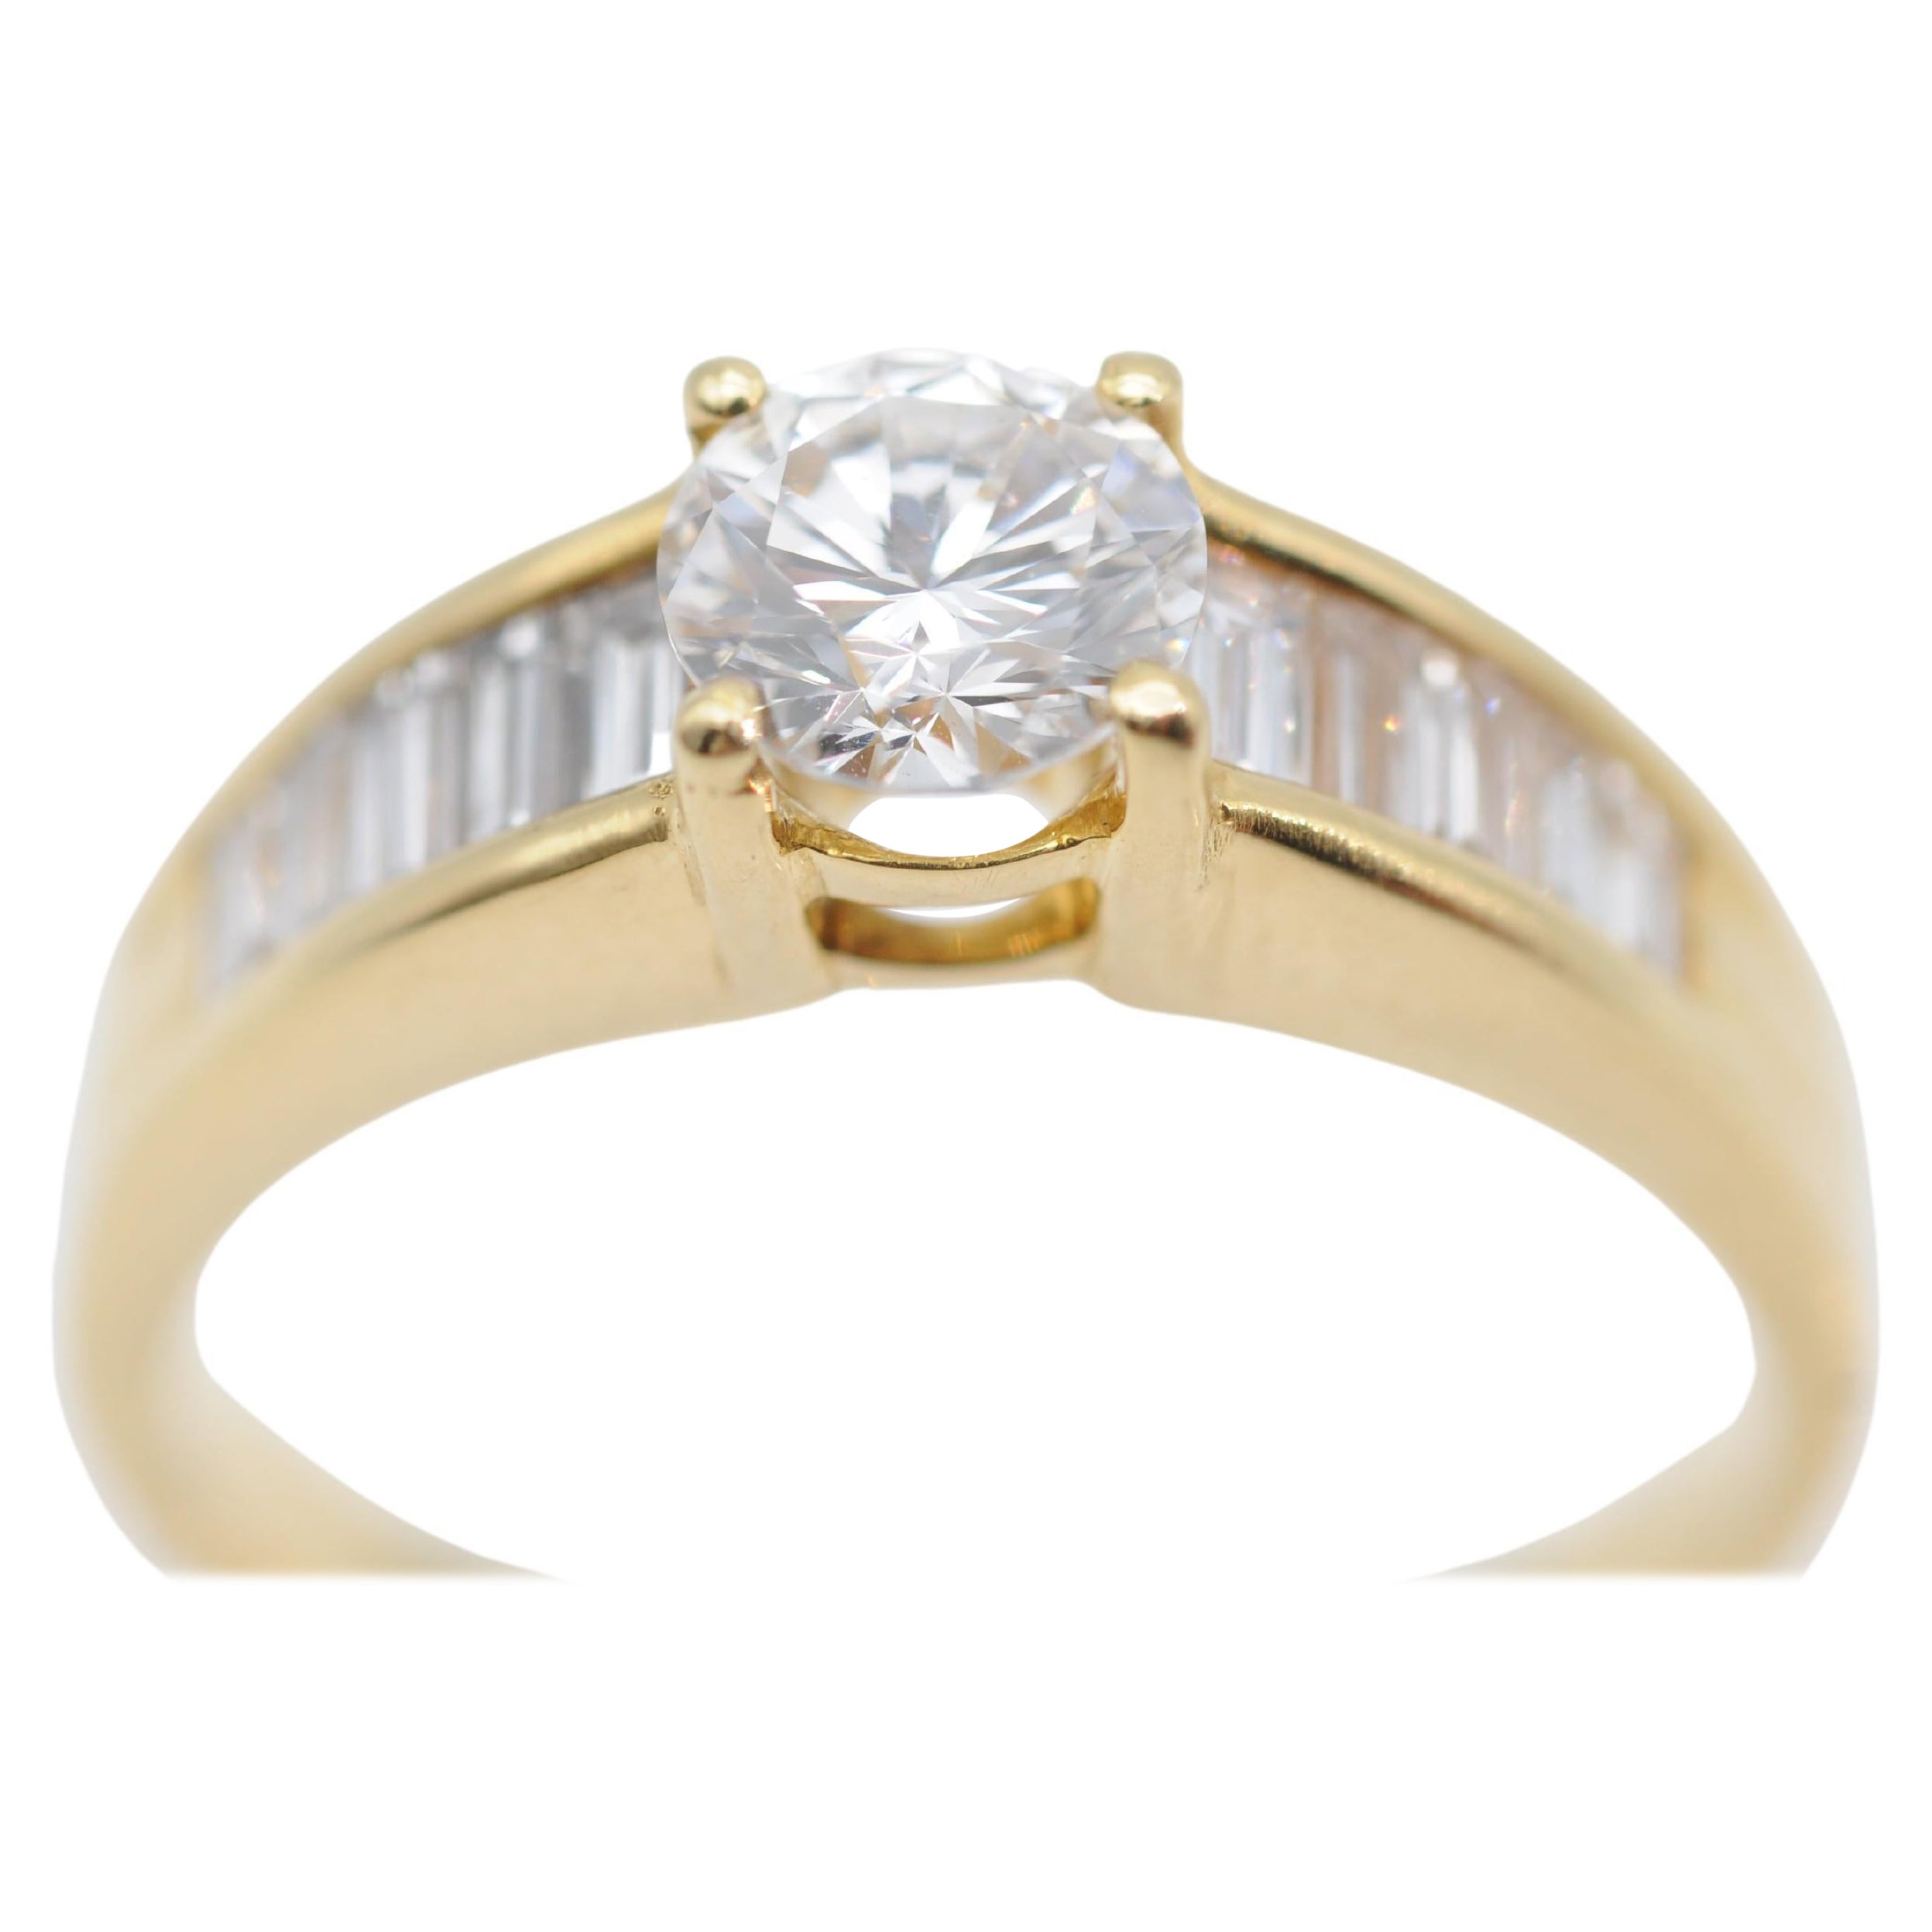 Diamond Solitaire Ring 1.05ct VVS1, River(D) with Baguette Stones For Sale